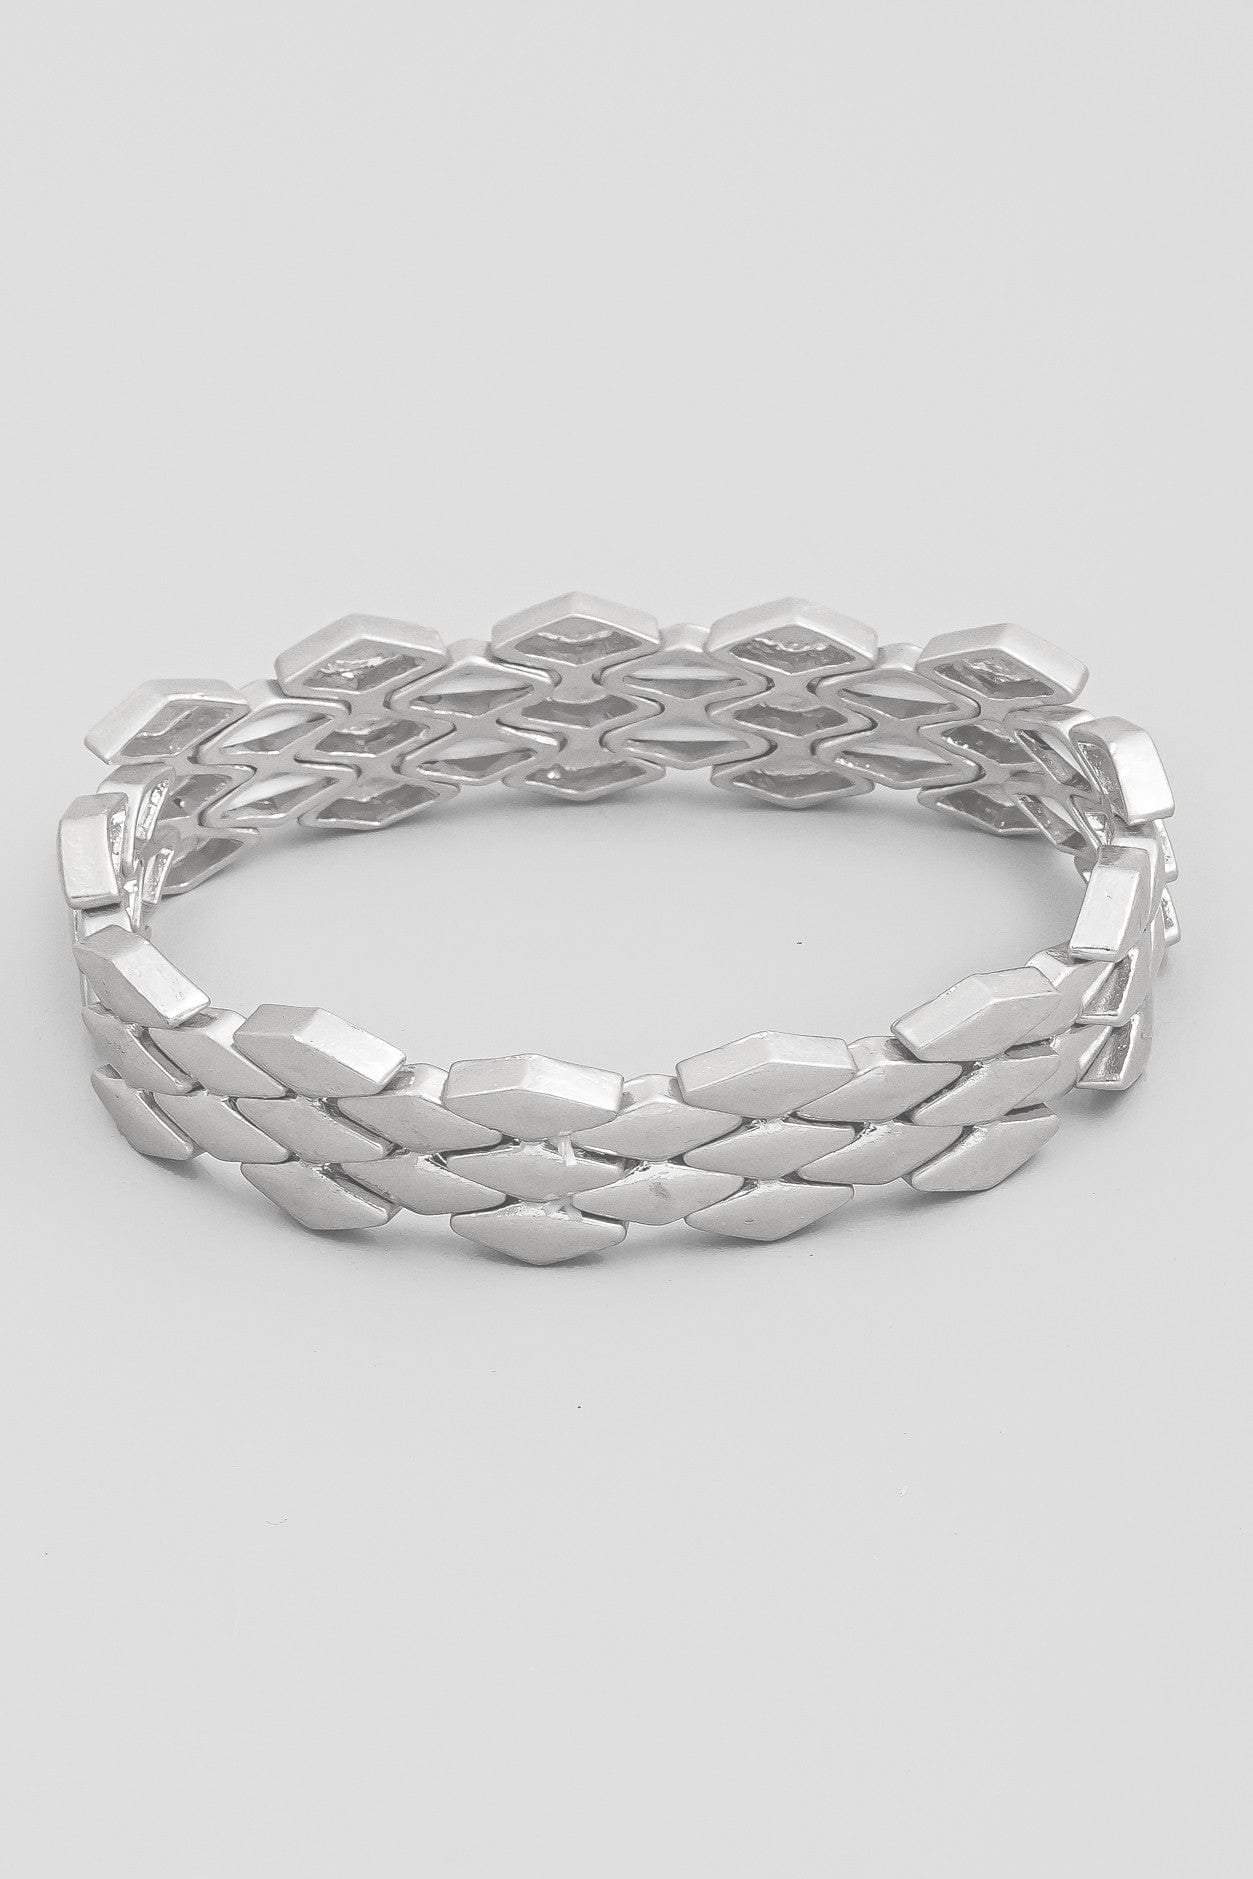 fame accessories Jewelry - Bracelets Metallic Elastic Scales Bracelet In Silver